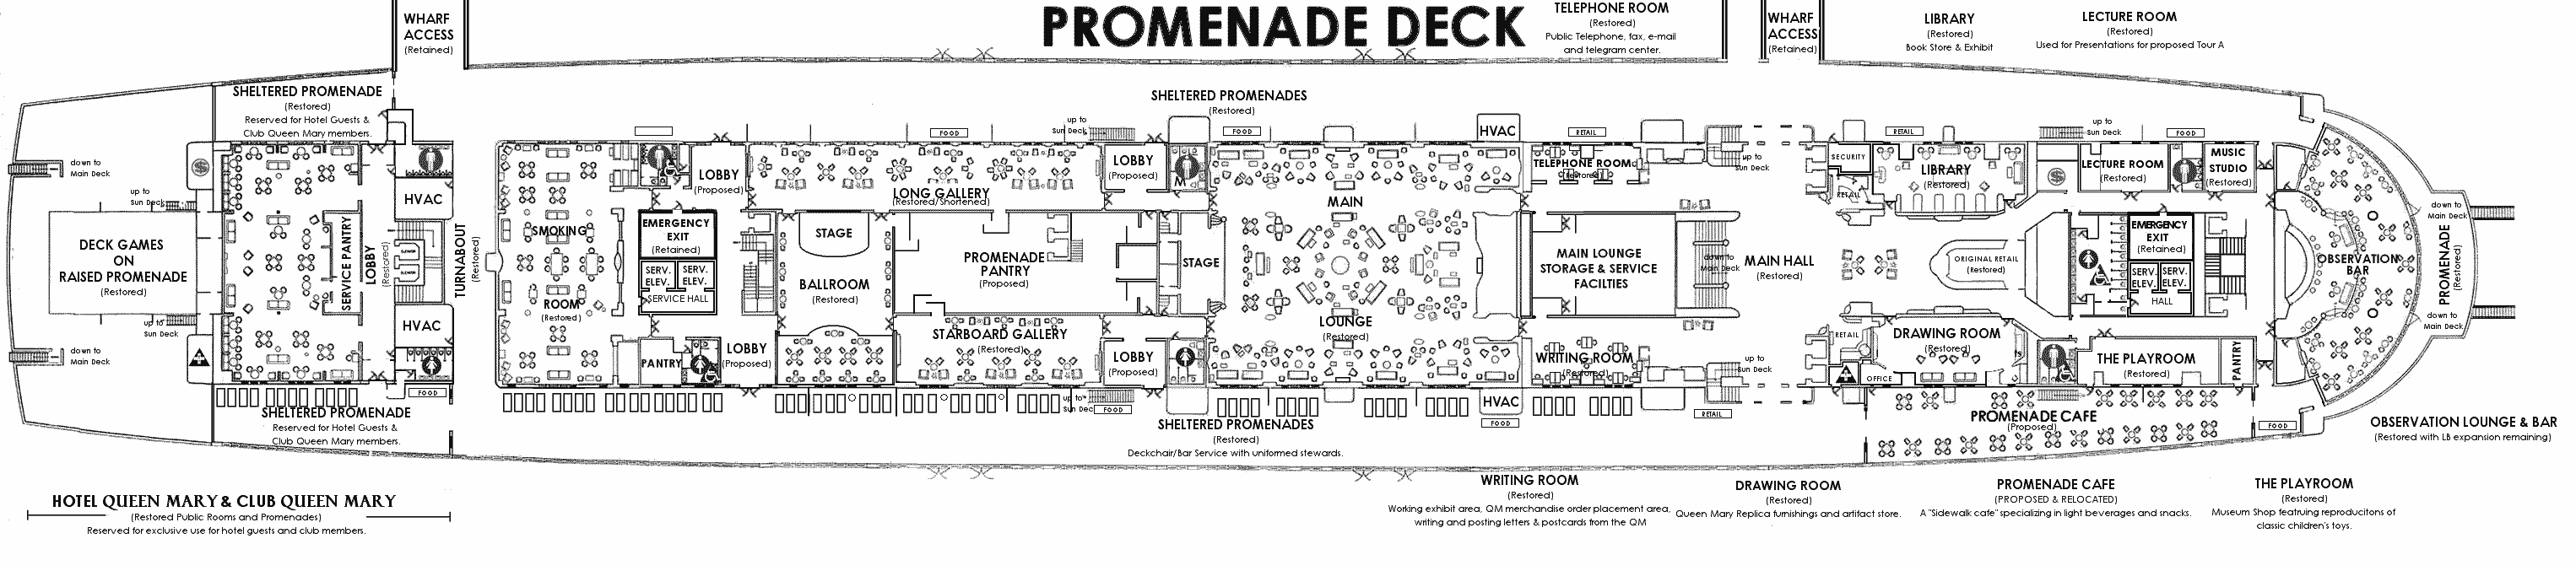 Promenade Deck As Proposed